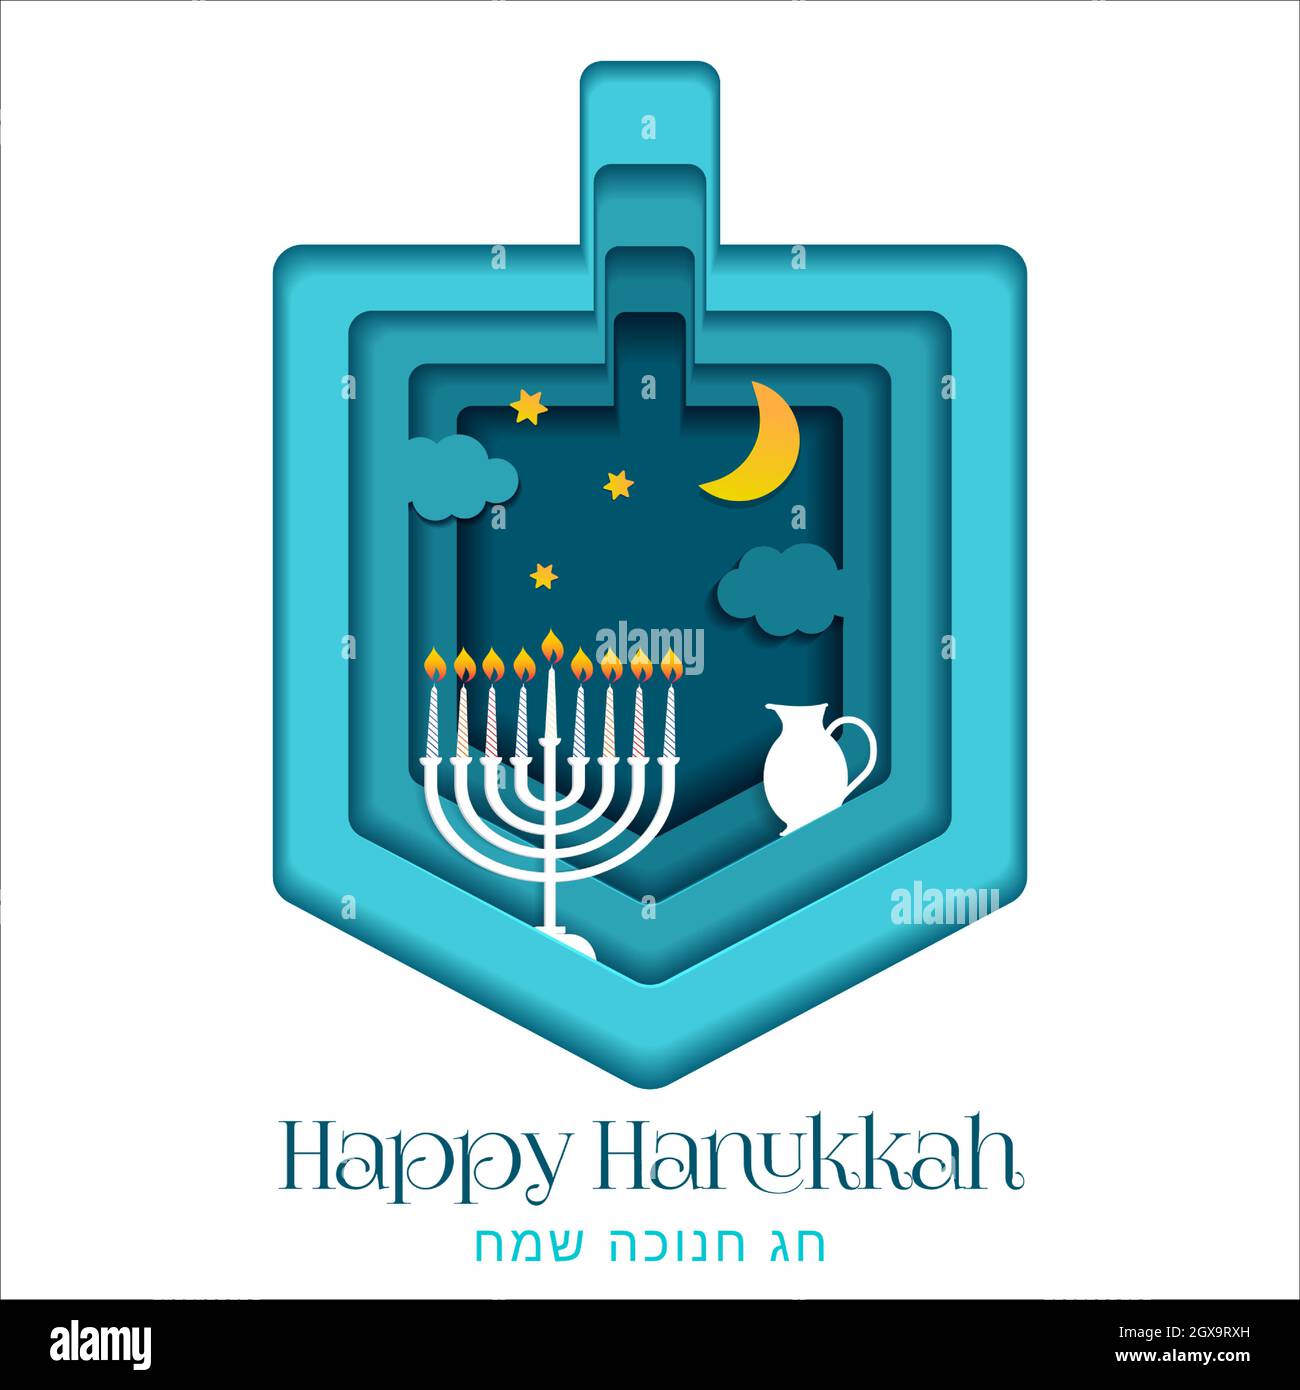 Happy Hanukkah, Jewish Festival of Lights paper cut greeting card with Chanukah symbols dreidels, spinning top, Hebrew letters, menorah candles, oil j Stock Vector